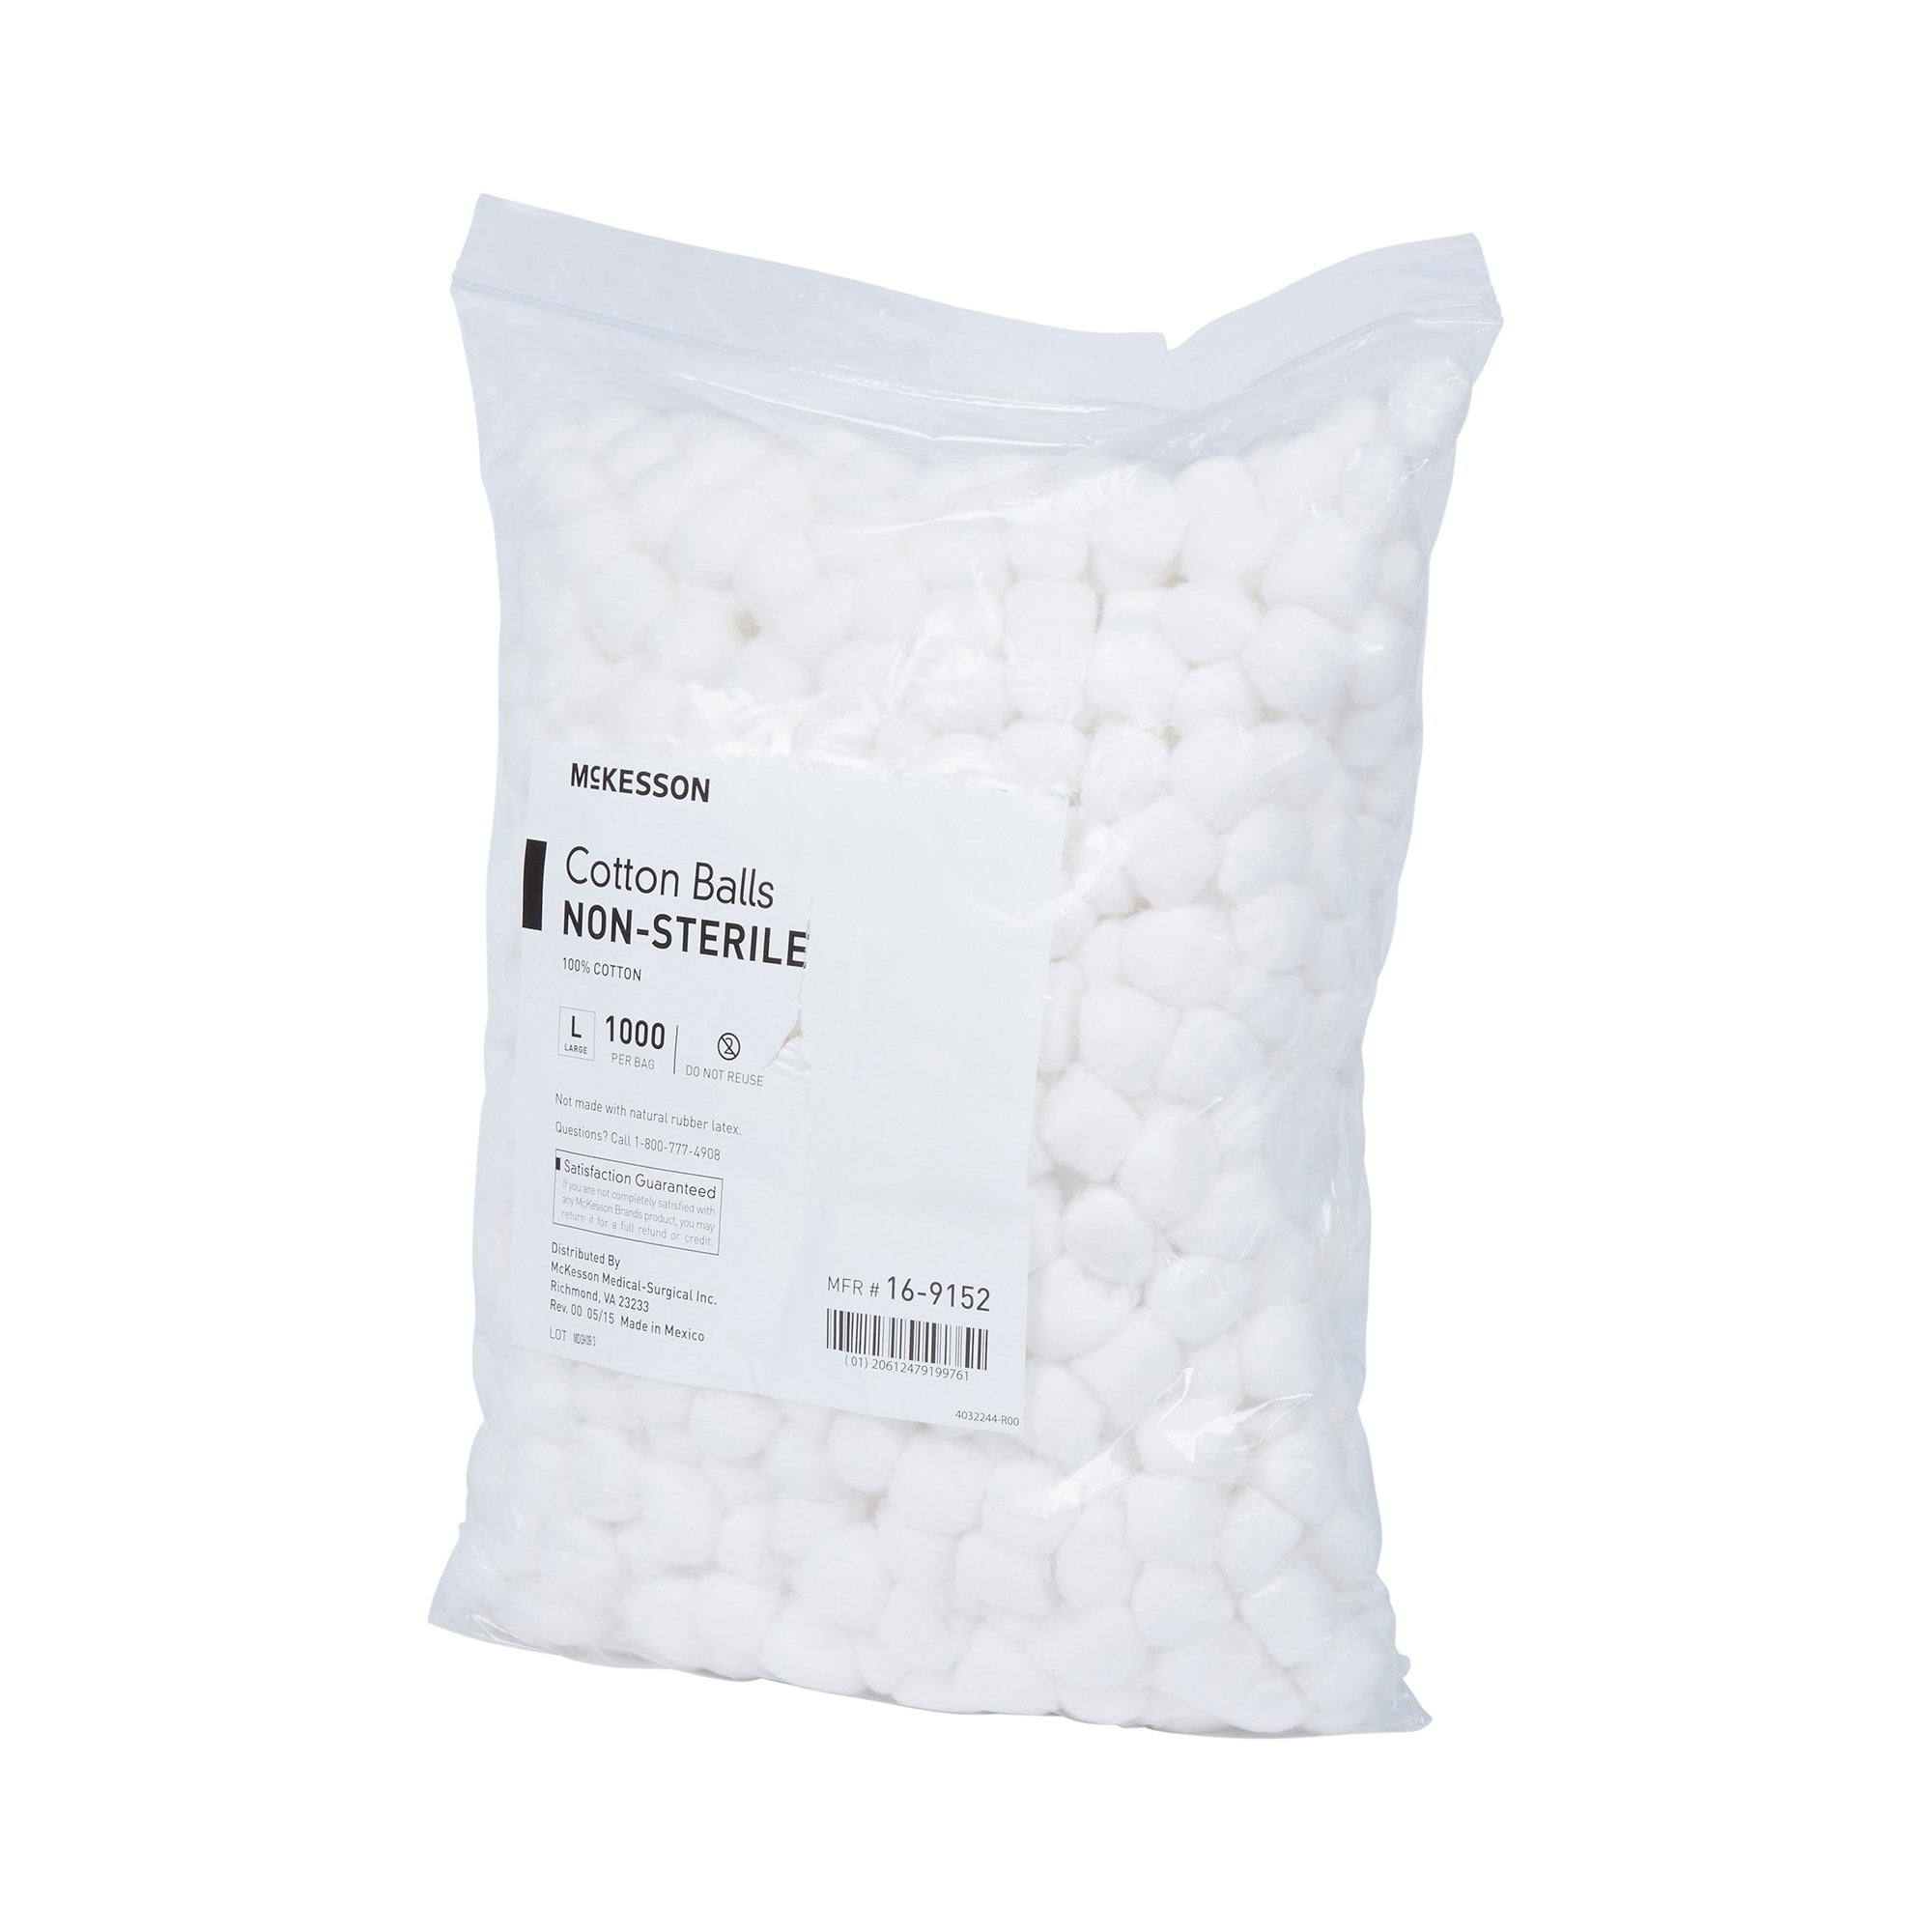 Intrinsics Large Cotton Balls 100/pack